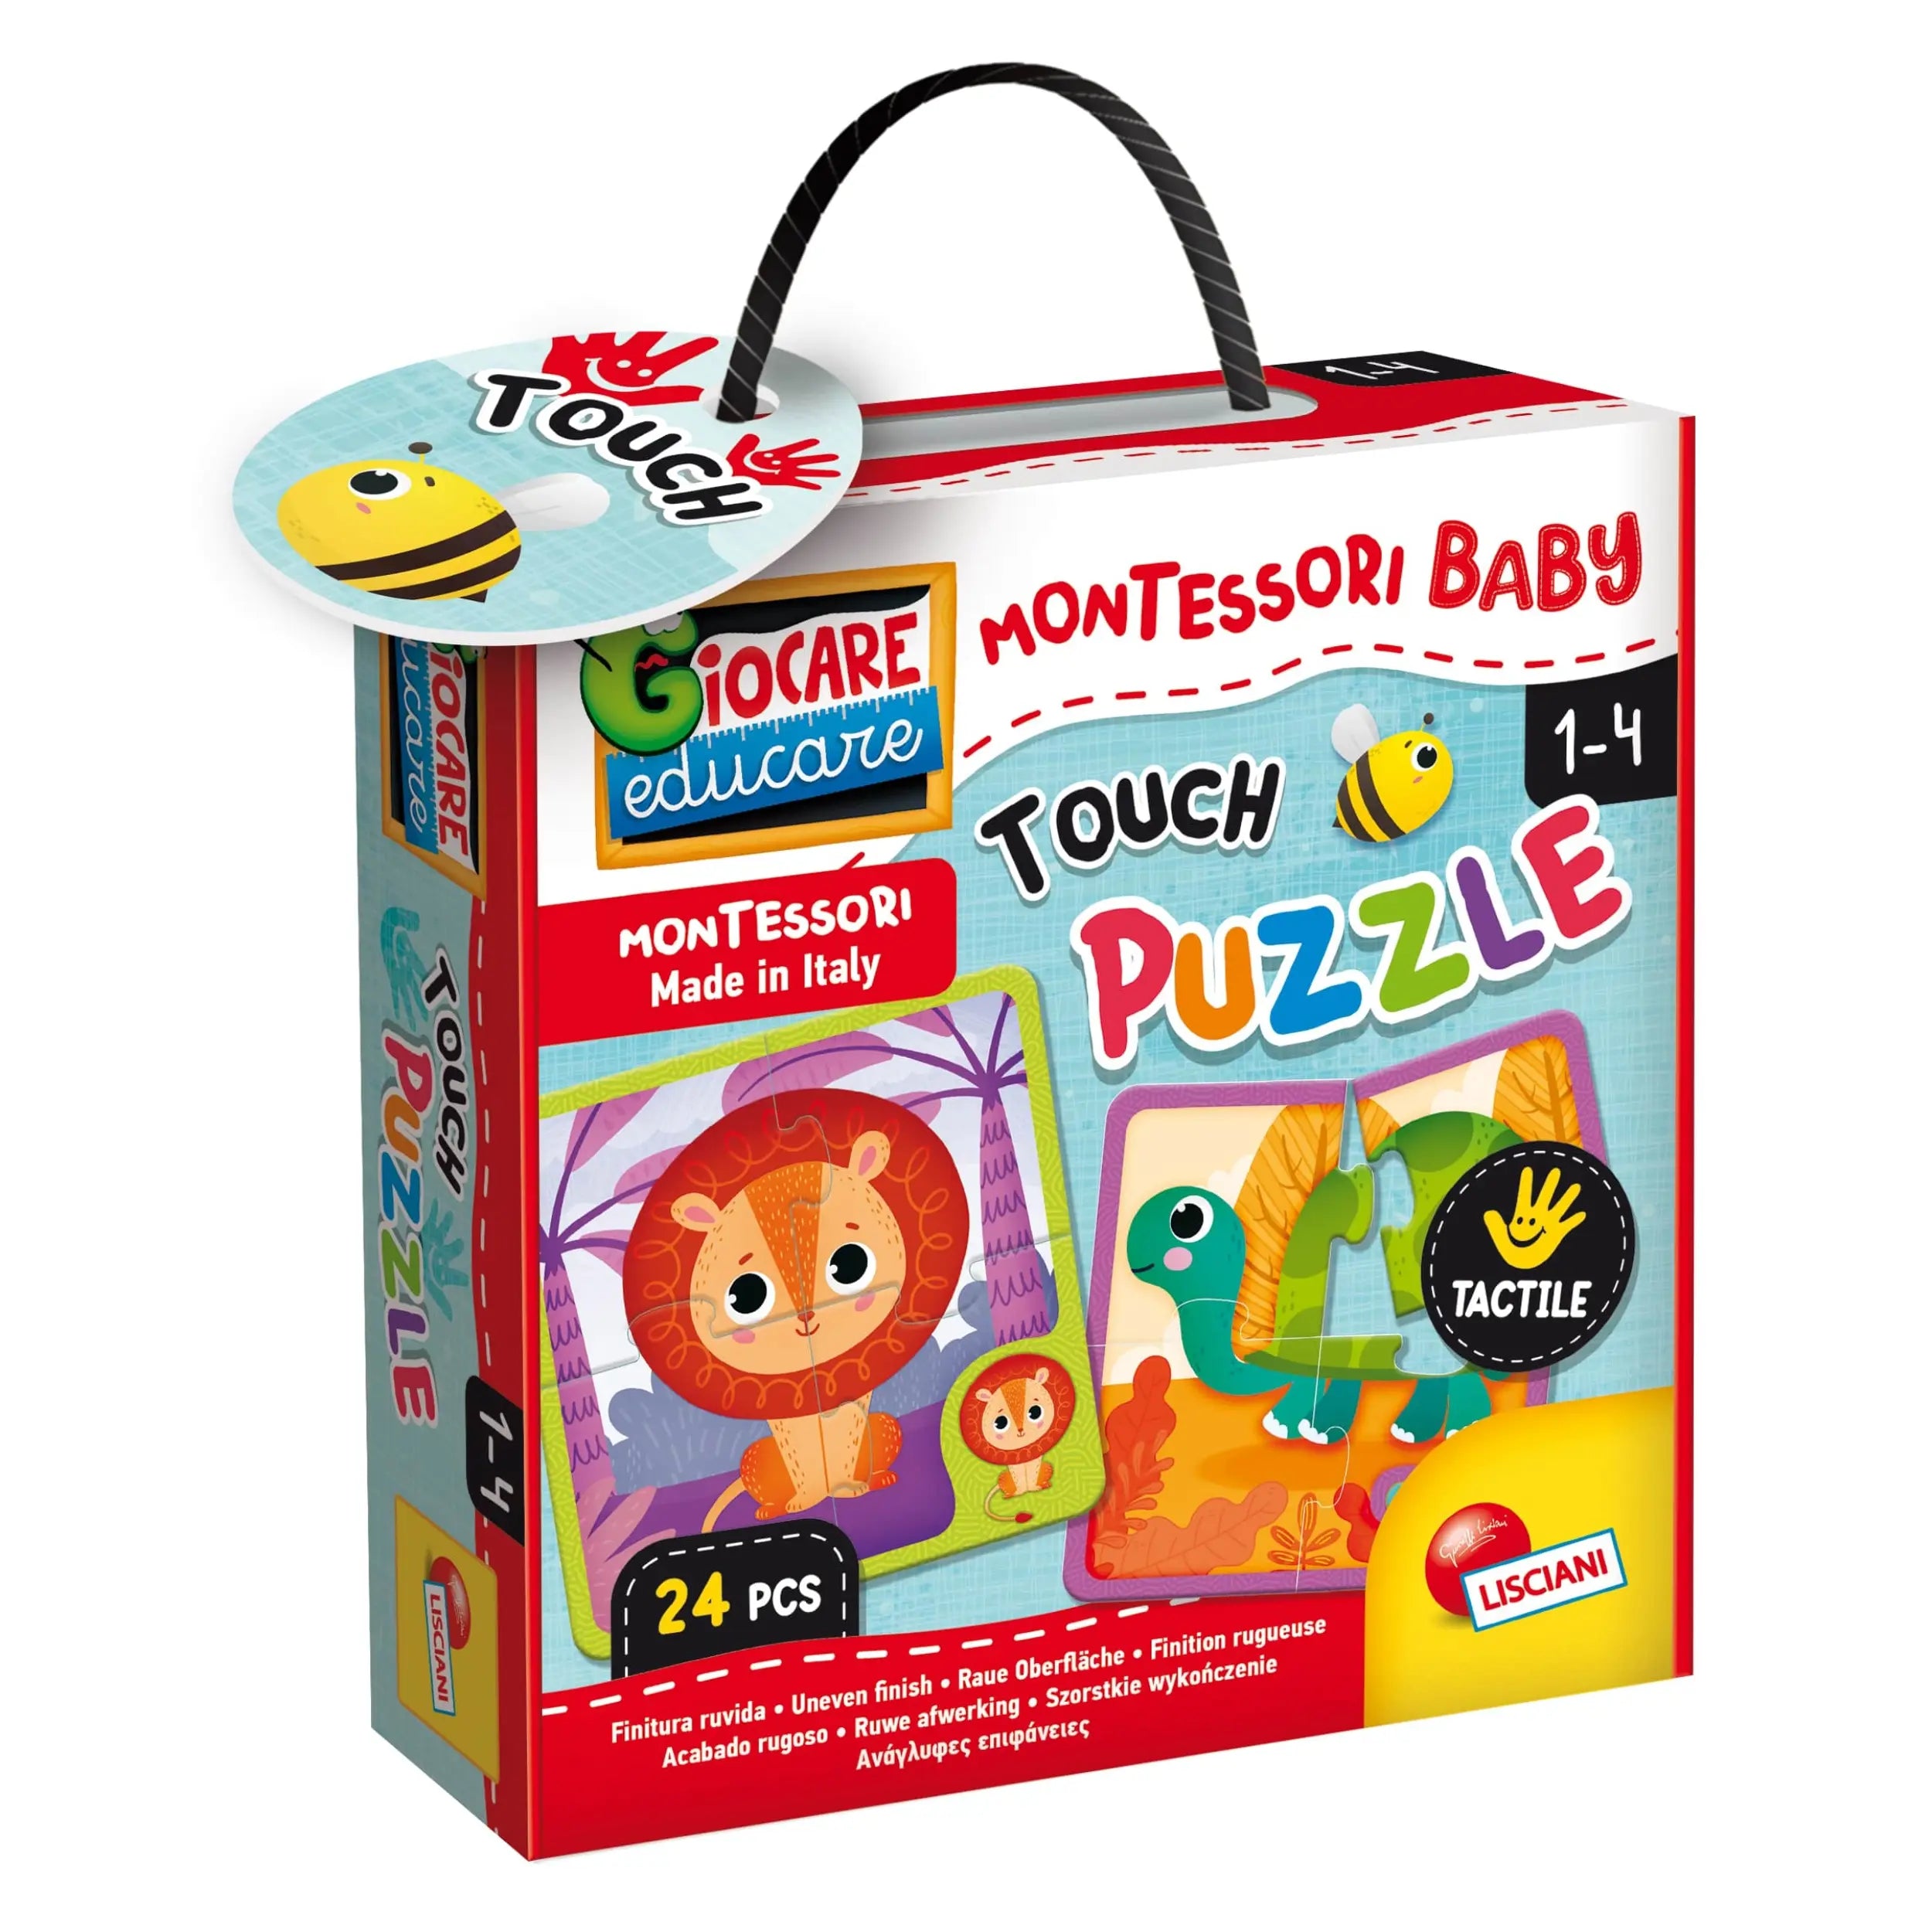 Lisciani - Montessori Baby Touch Puzzle LSC92680 - International